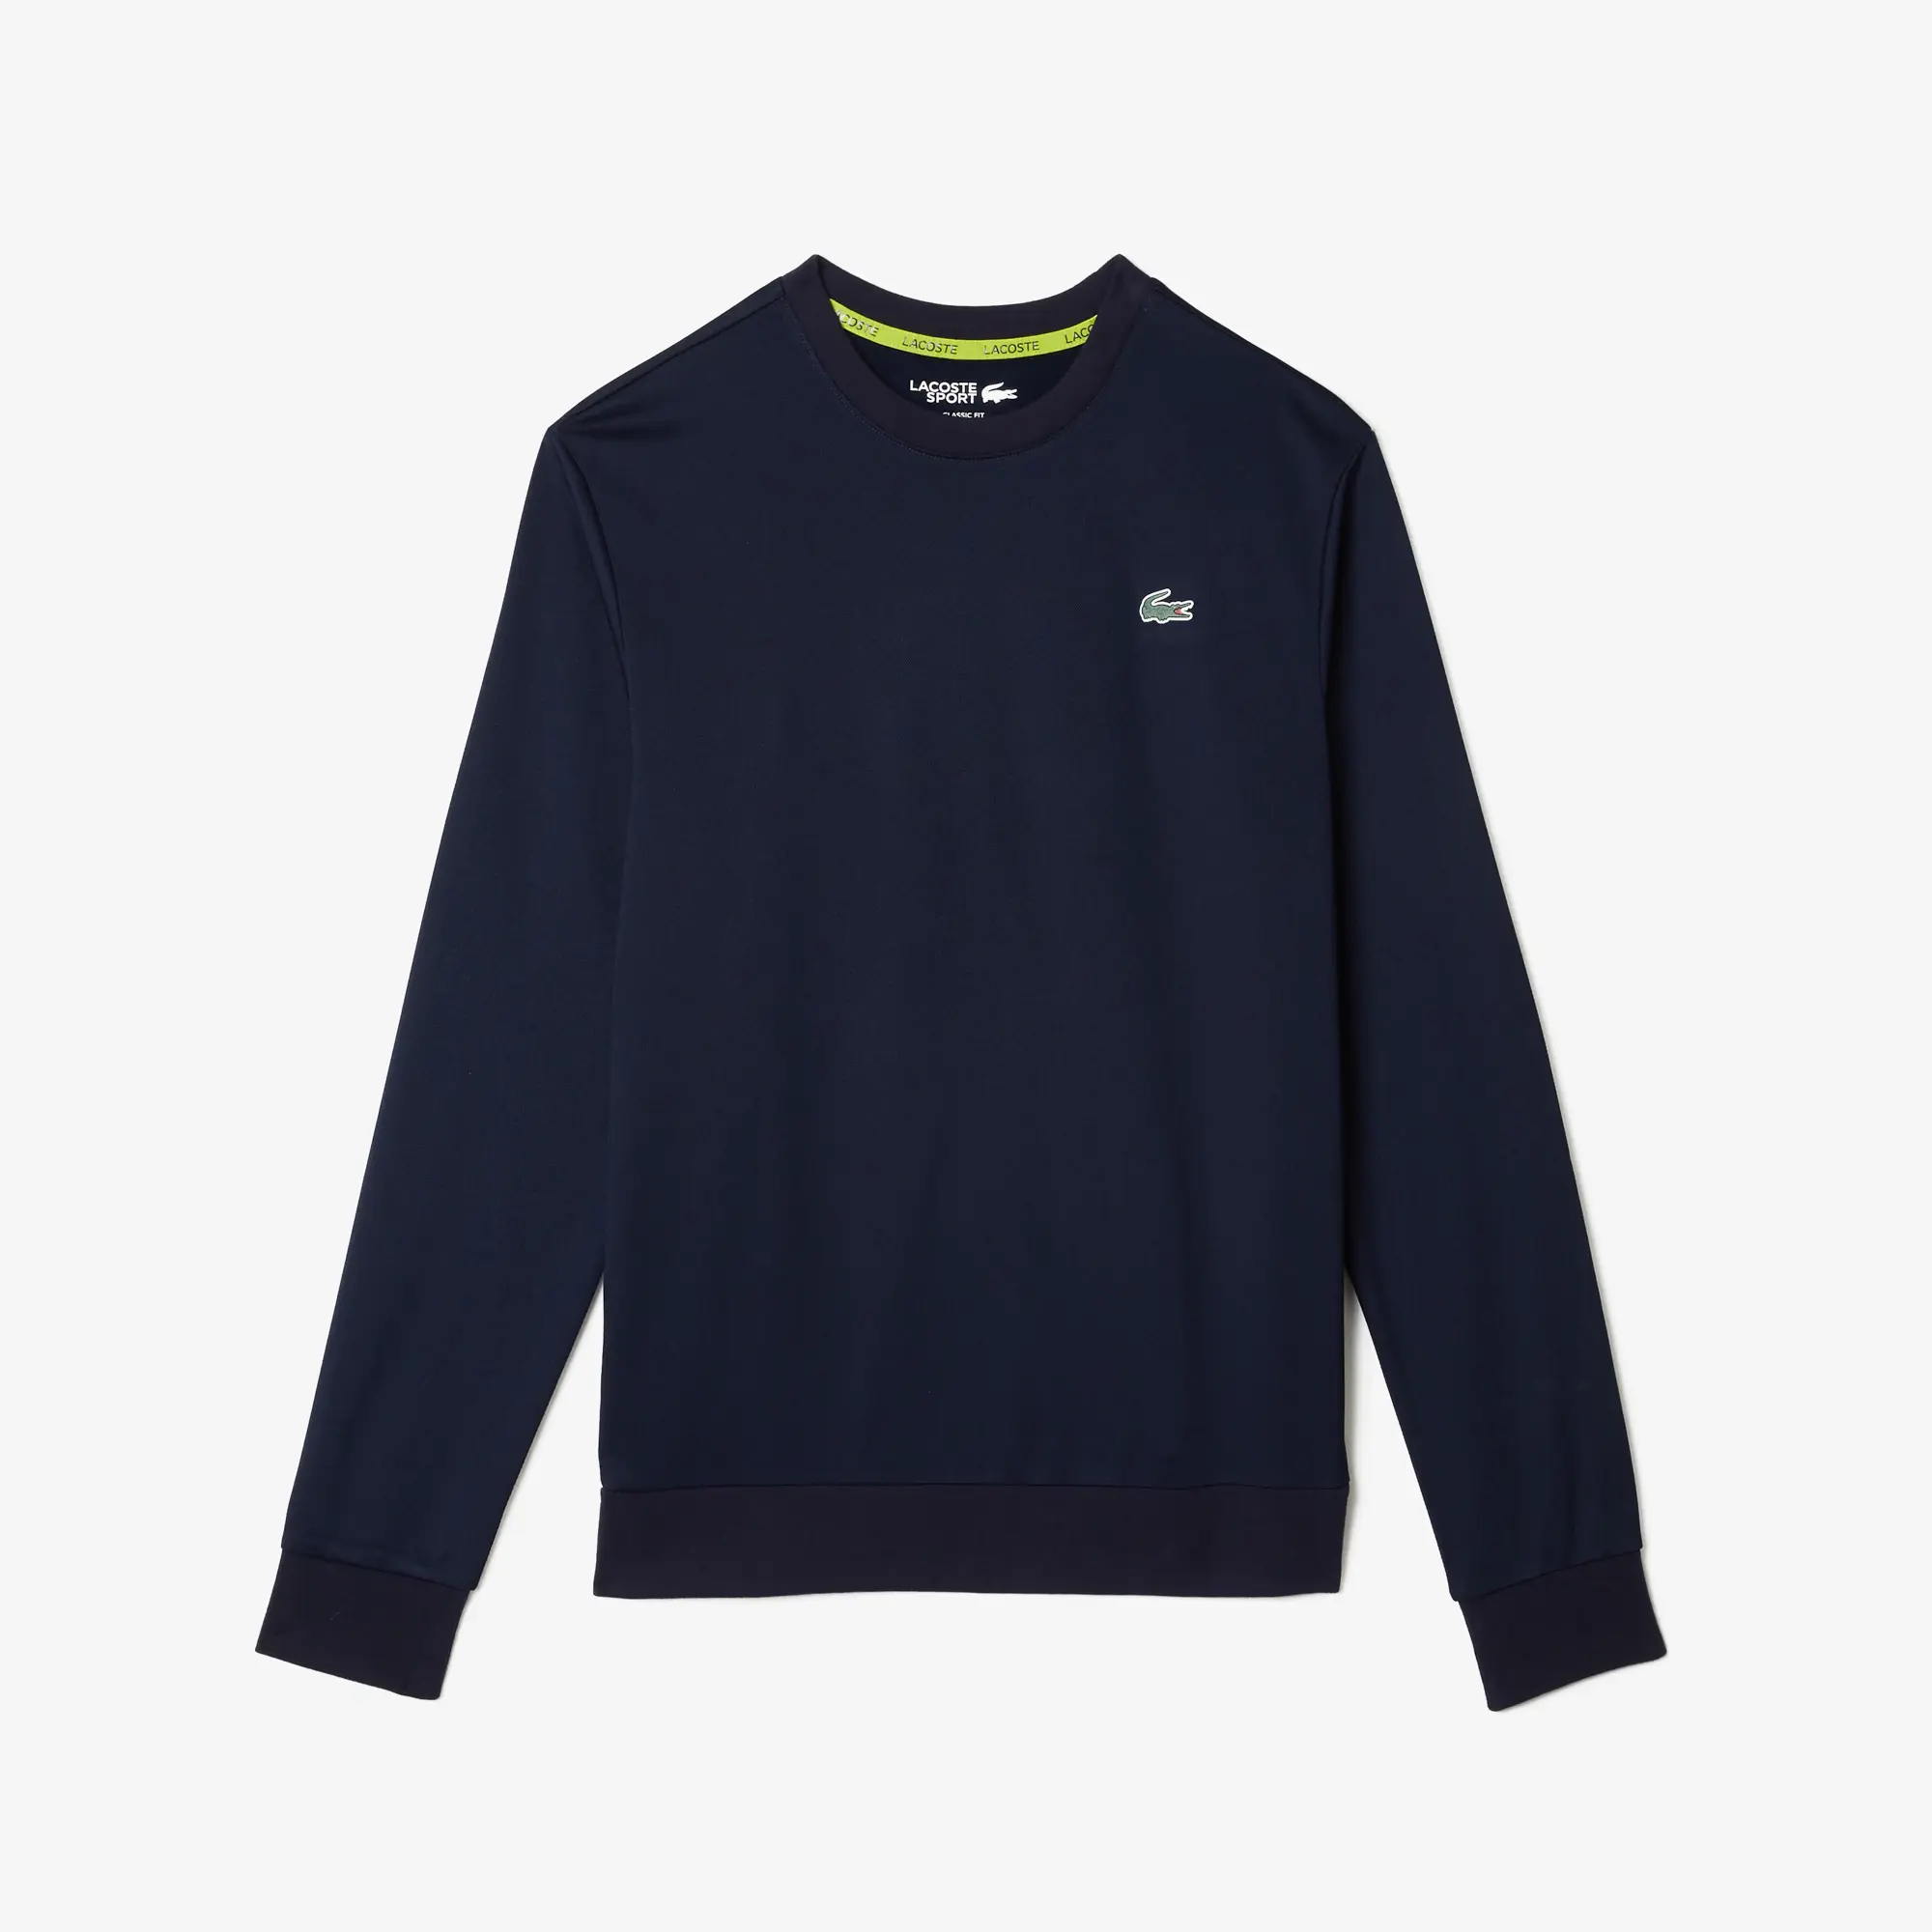 Lacoste Men's SPORT Printed Tennis Sweatshirt. 2